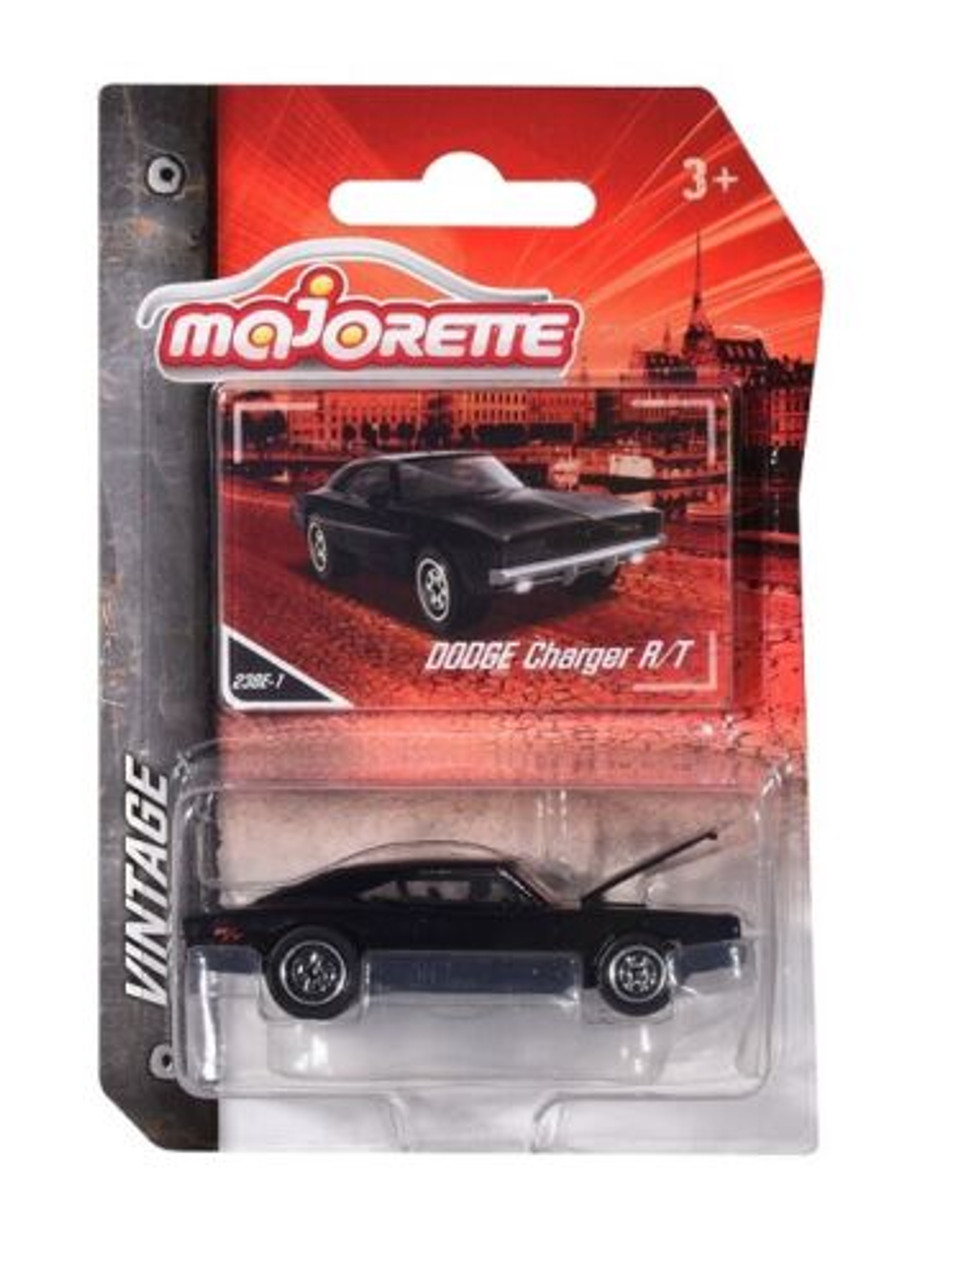 1/64 Majorette Dodge Charger R/T (Black) Car Model